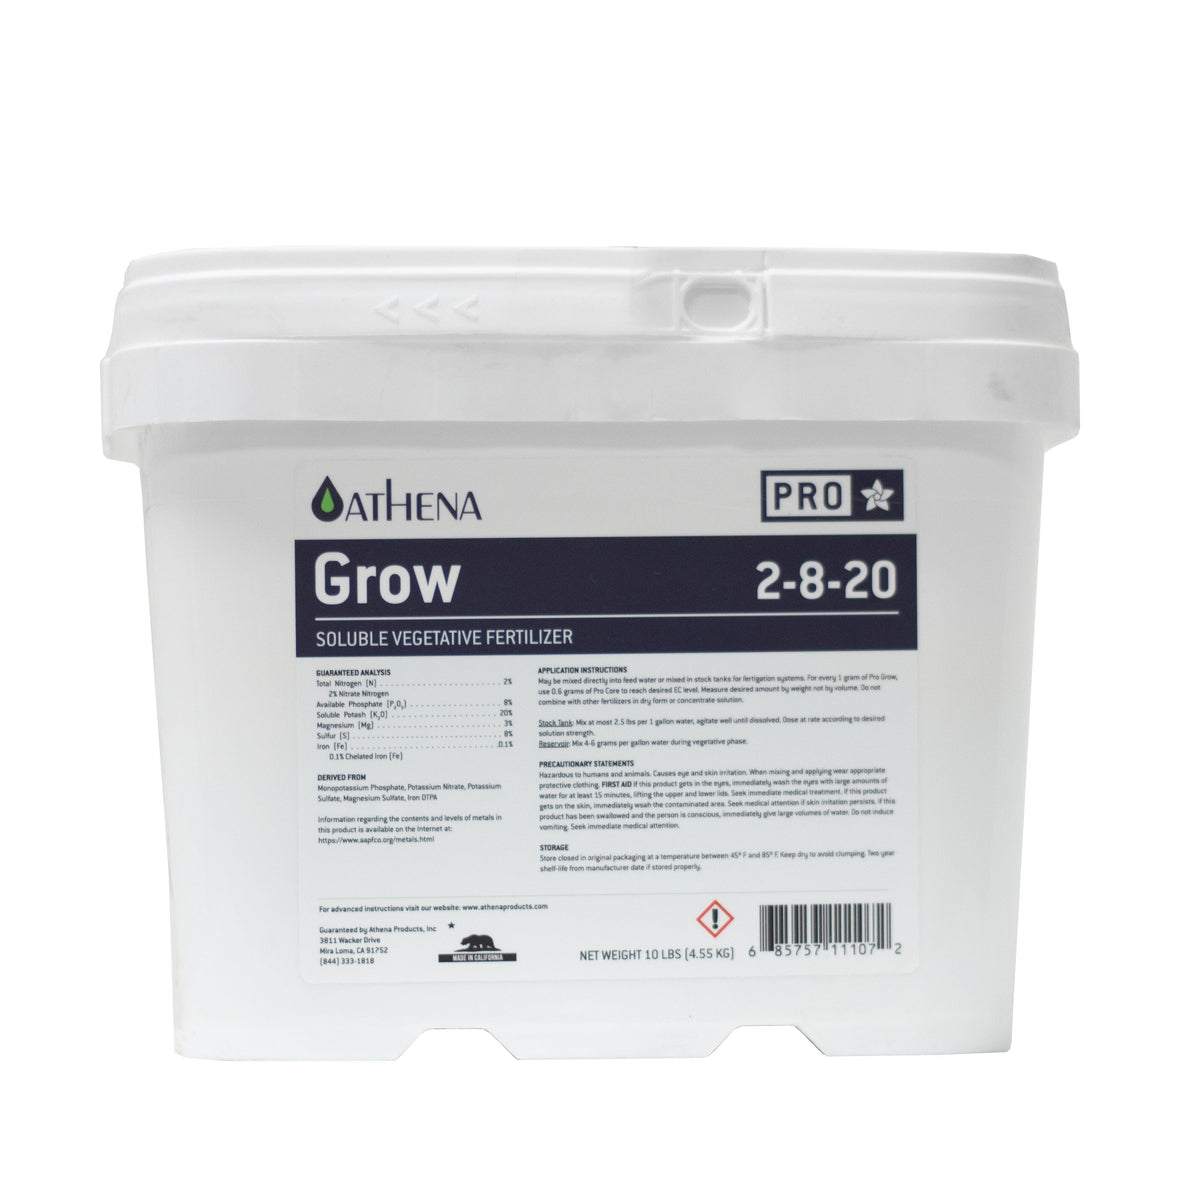 Athena Pro Grow 10 Lbs